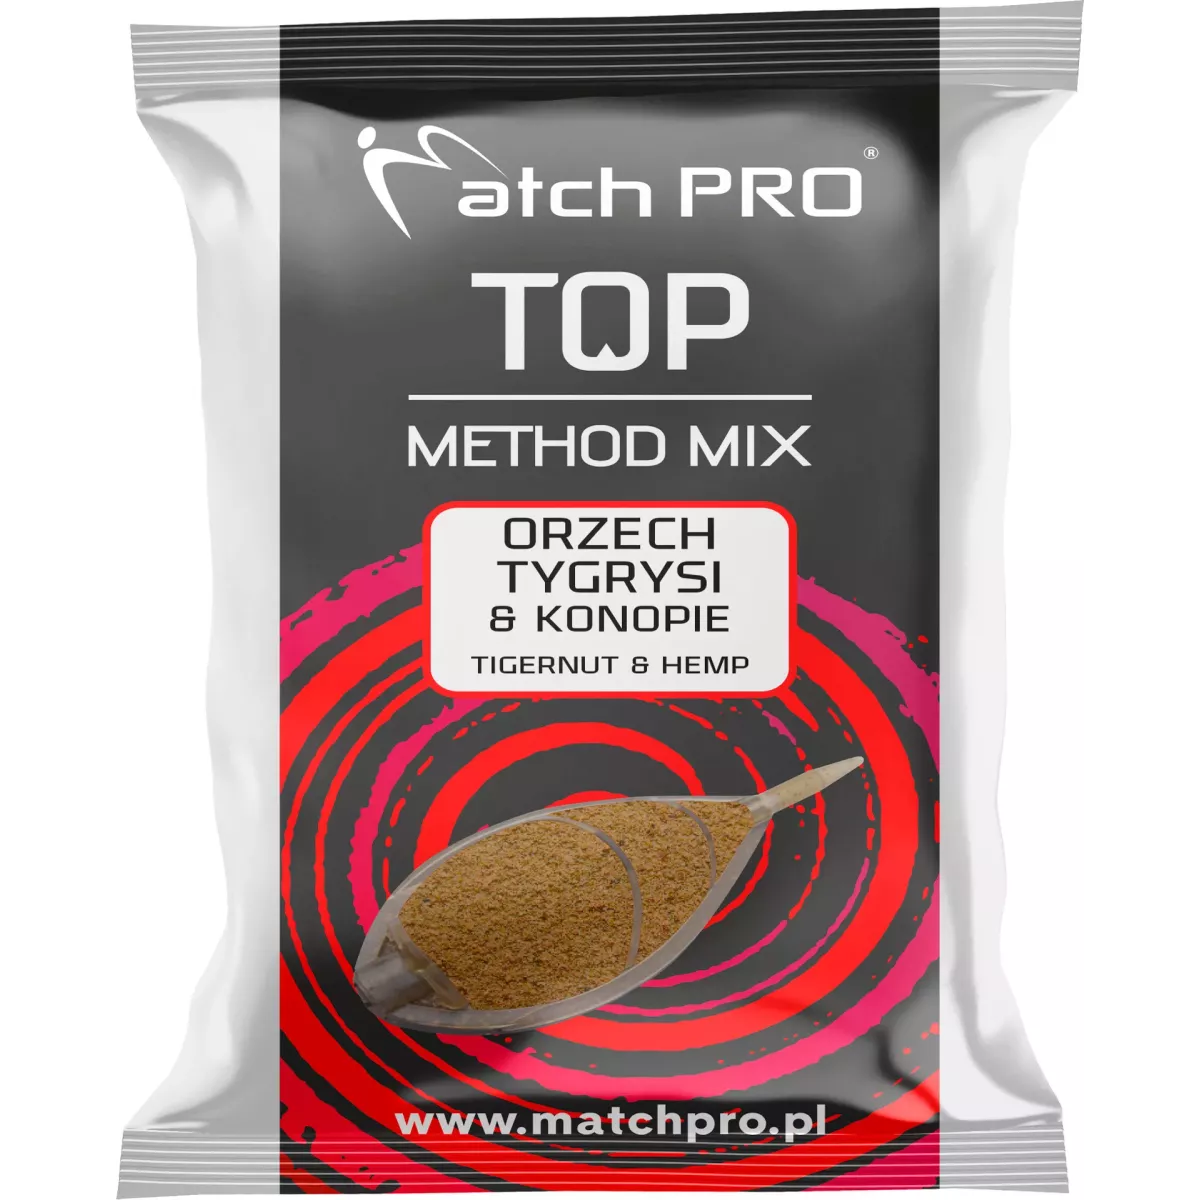 Zanęta MatchPro Method Mix TOP 700g - ORZECH TYGRYSI & KONOPIE